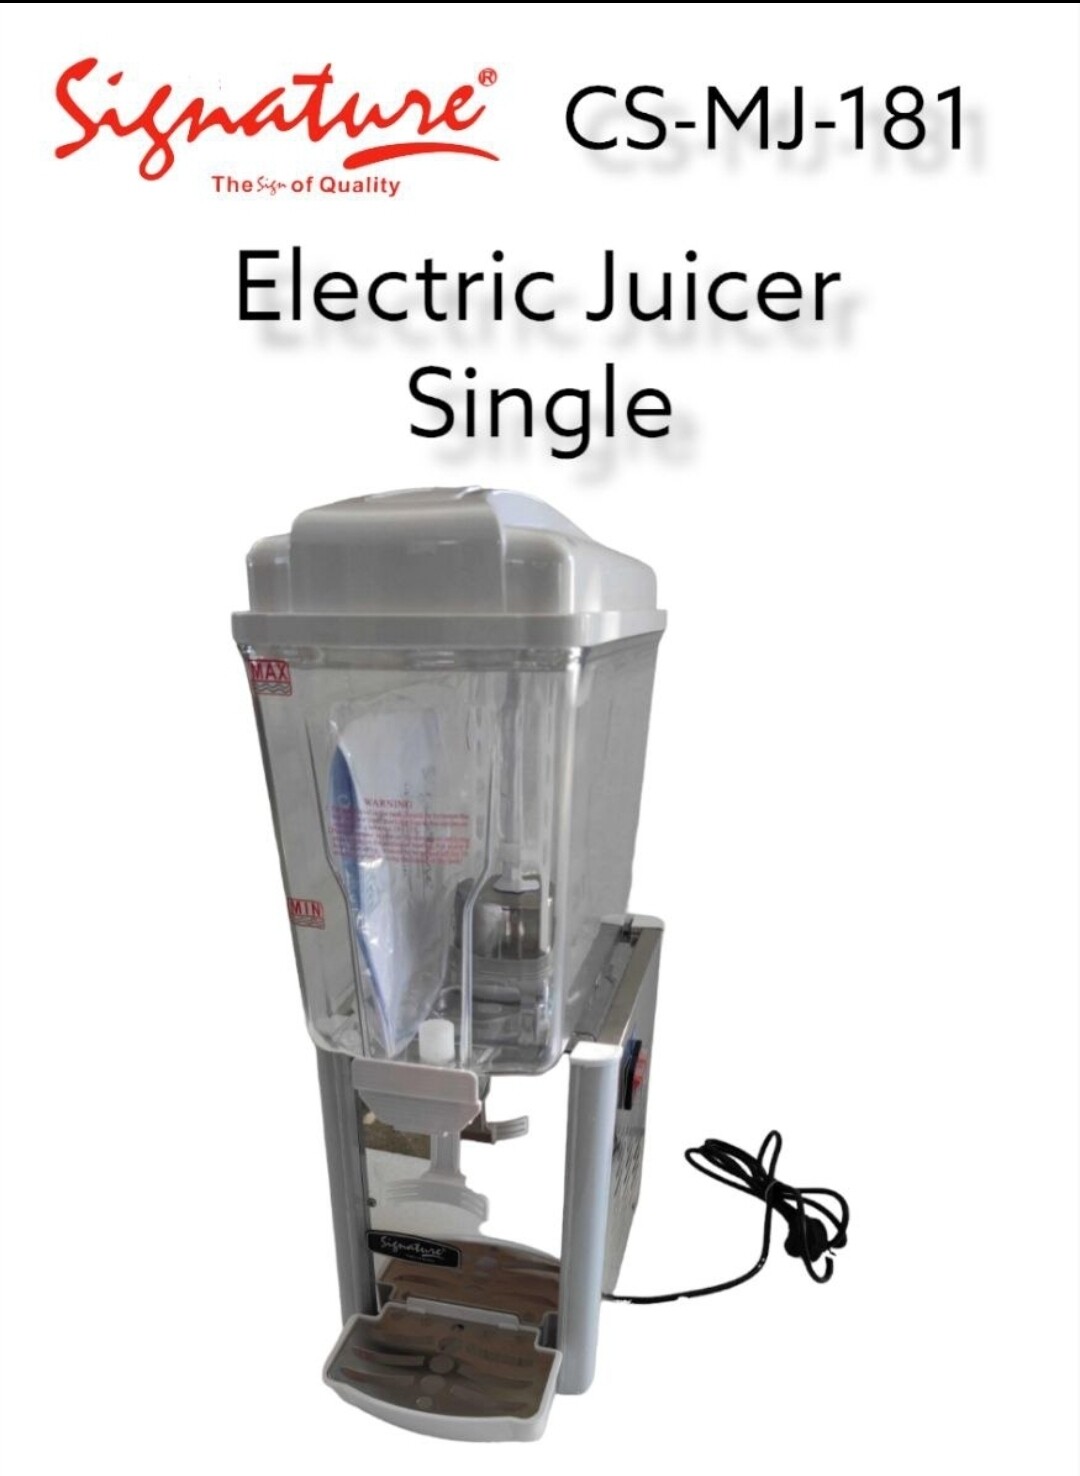 Signature Electric Juice Dispenser Single Capacity: Up to 17 Ltr CS-MJ-181